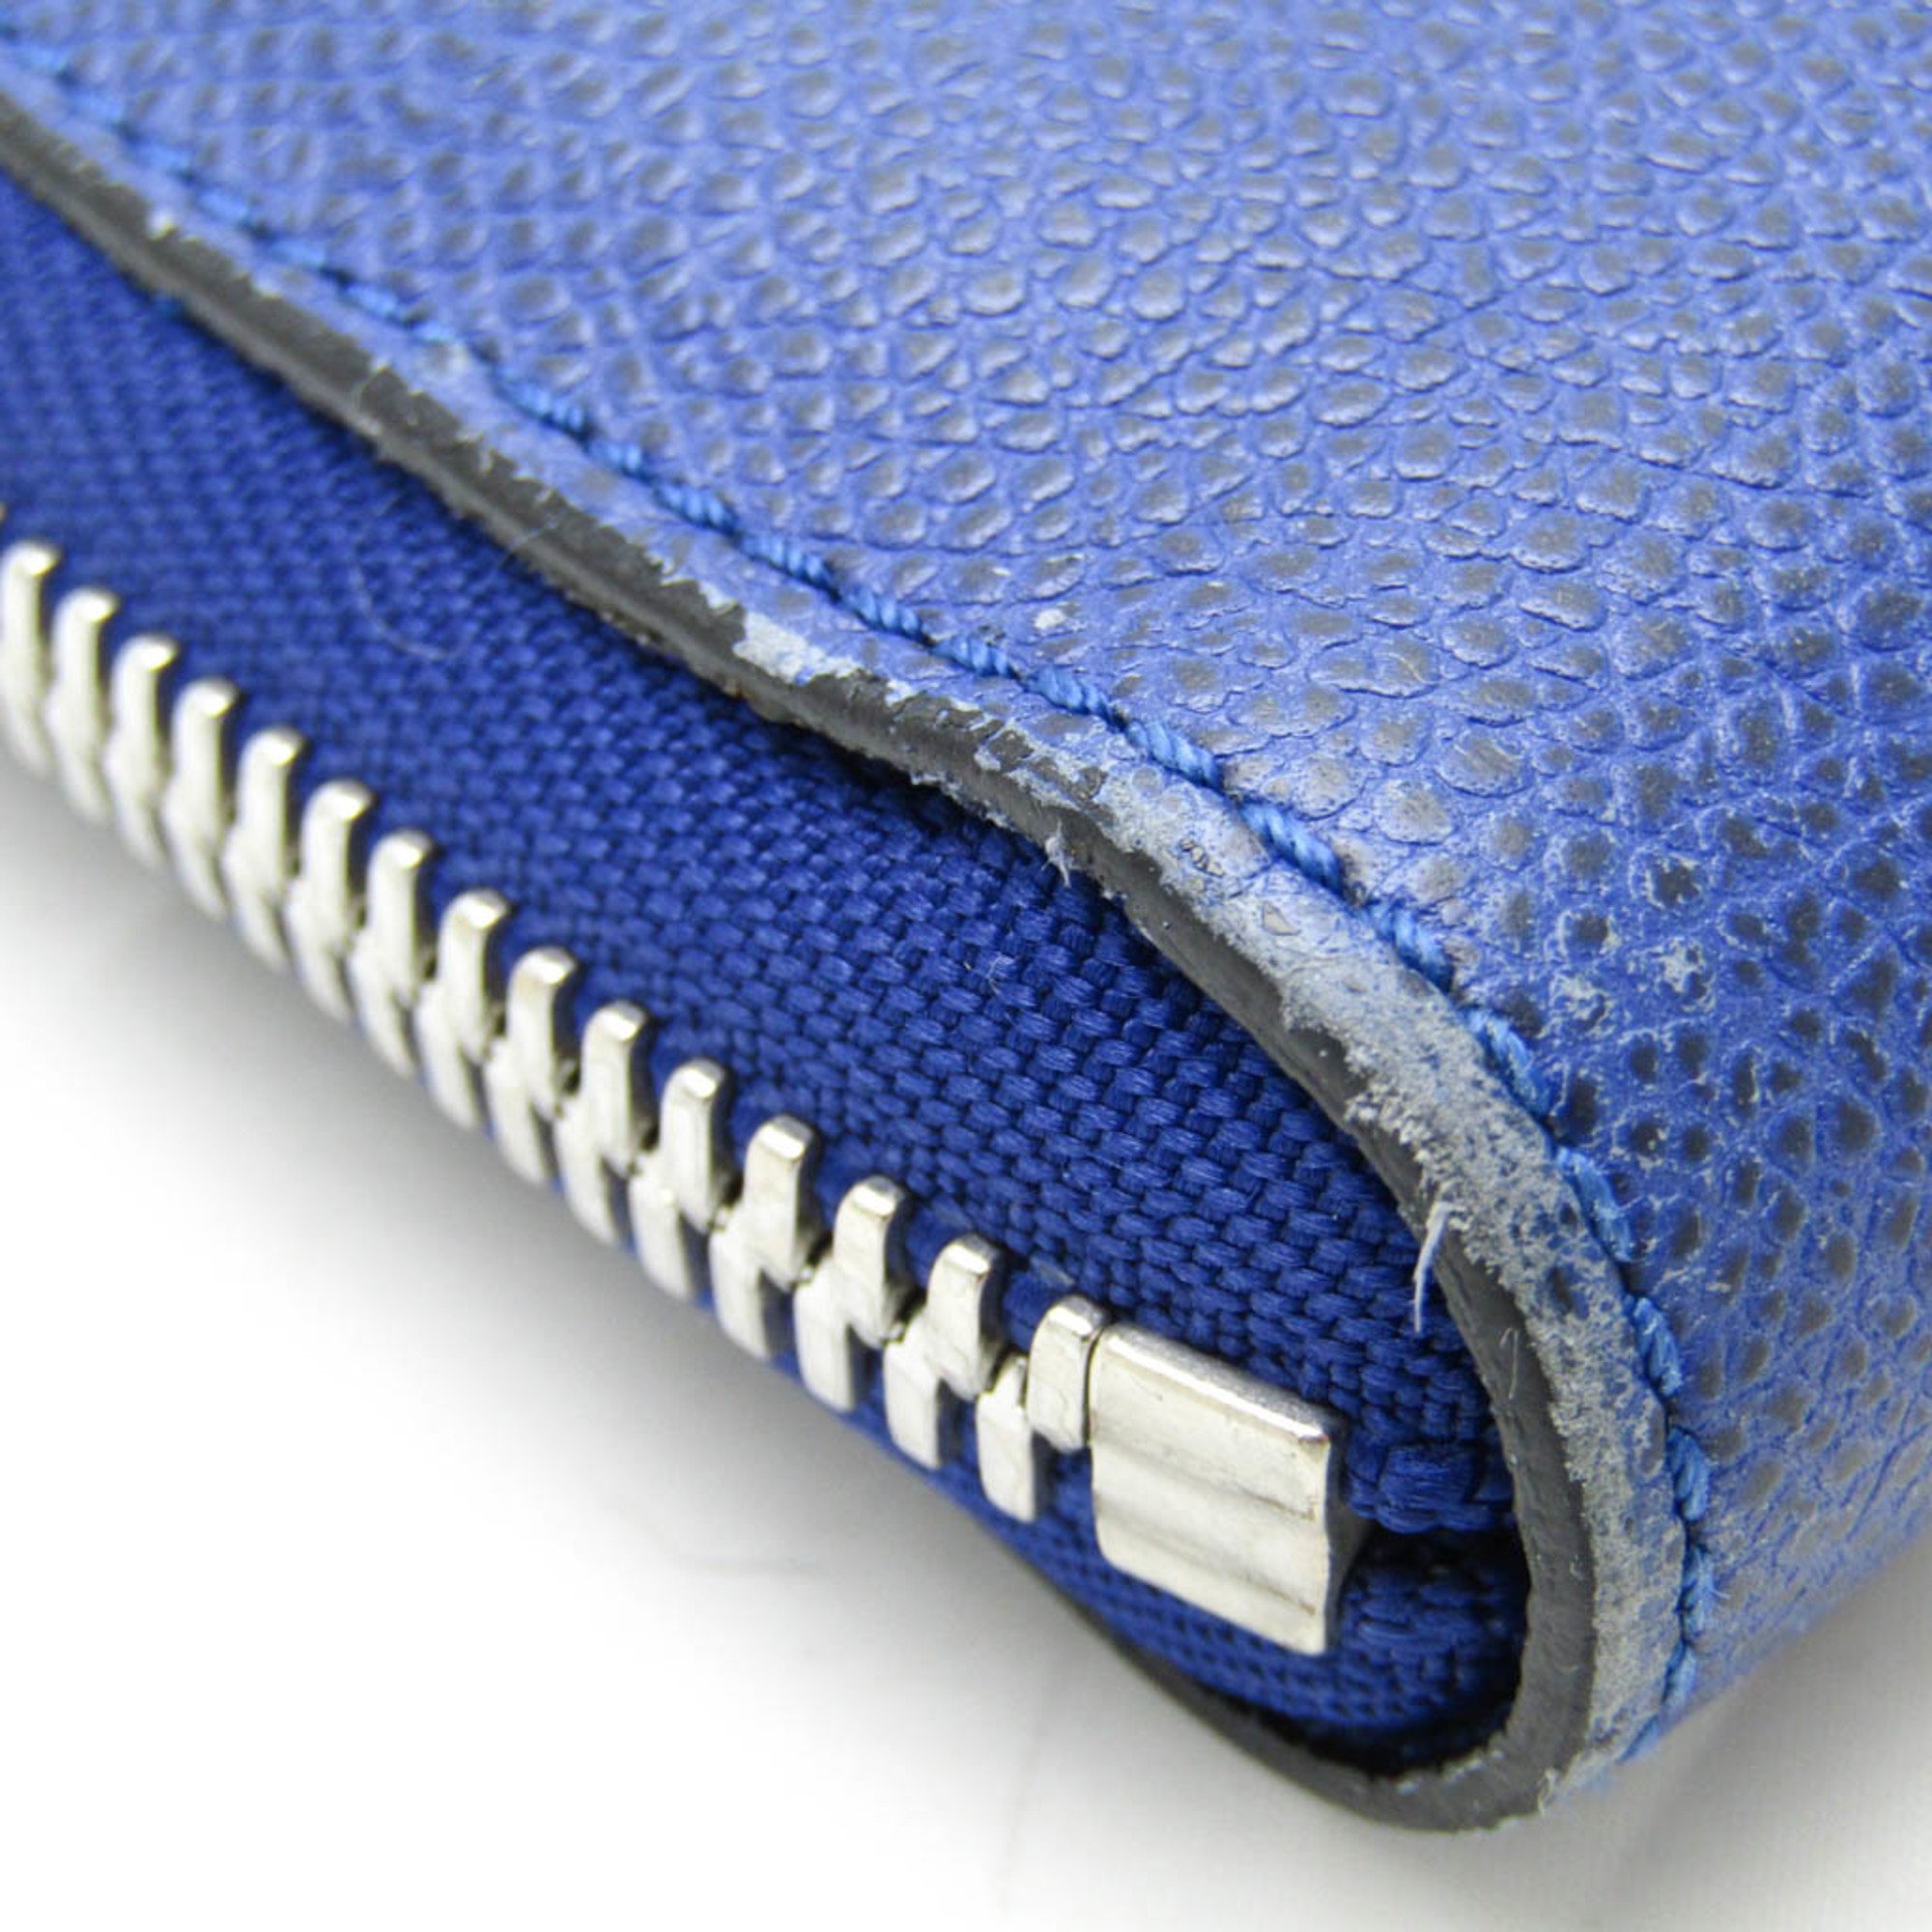 Valextra Organizer Travel Pouch Men's Leather Clutch Bag Royal Blue